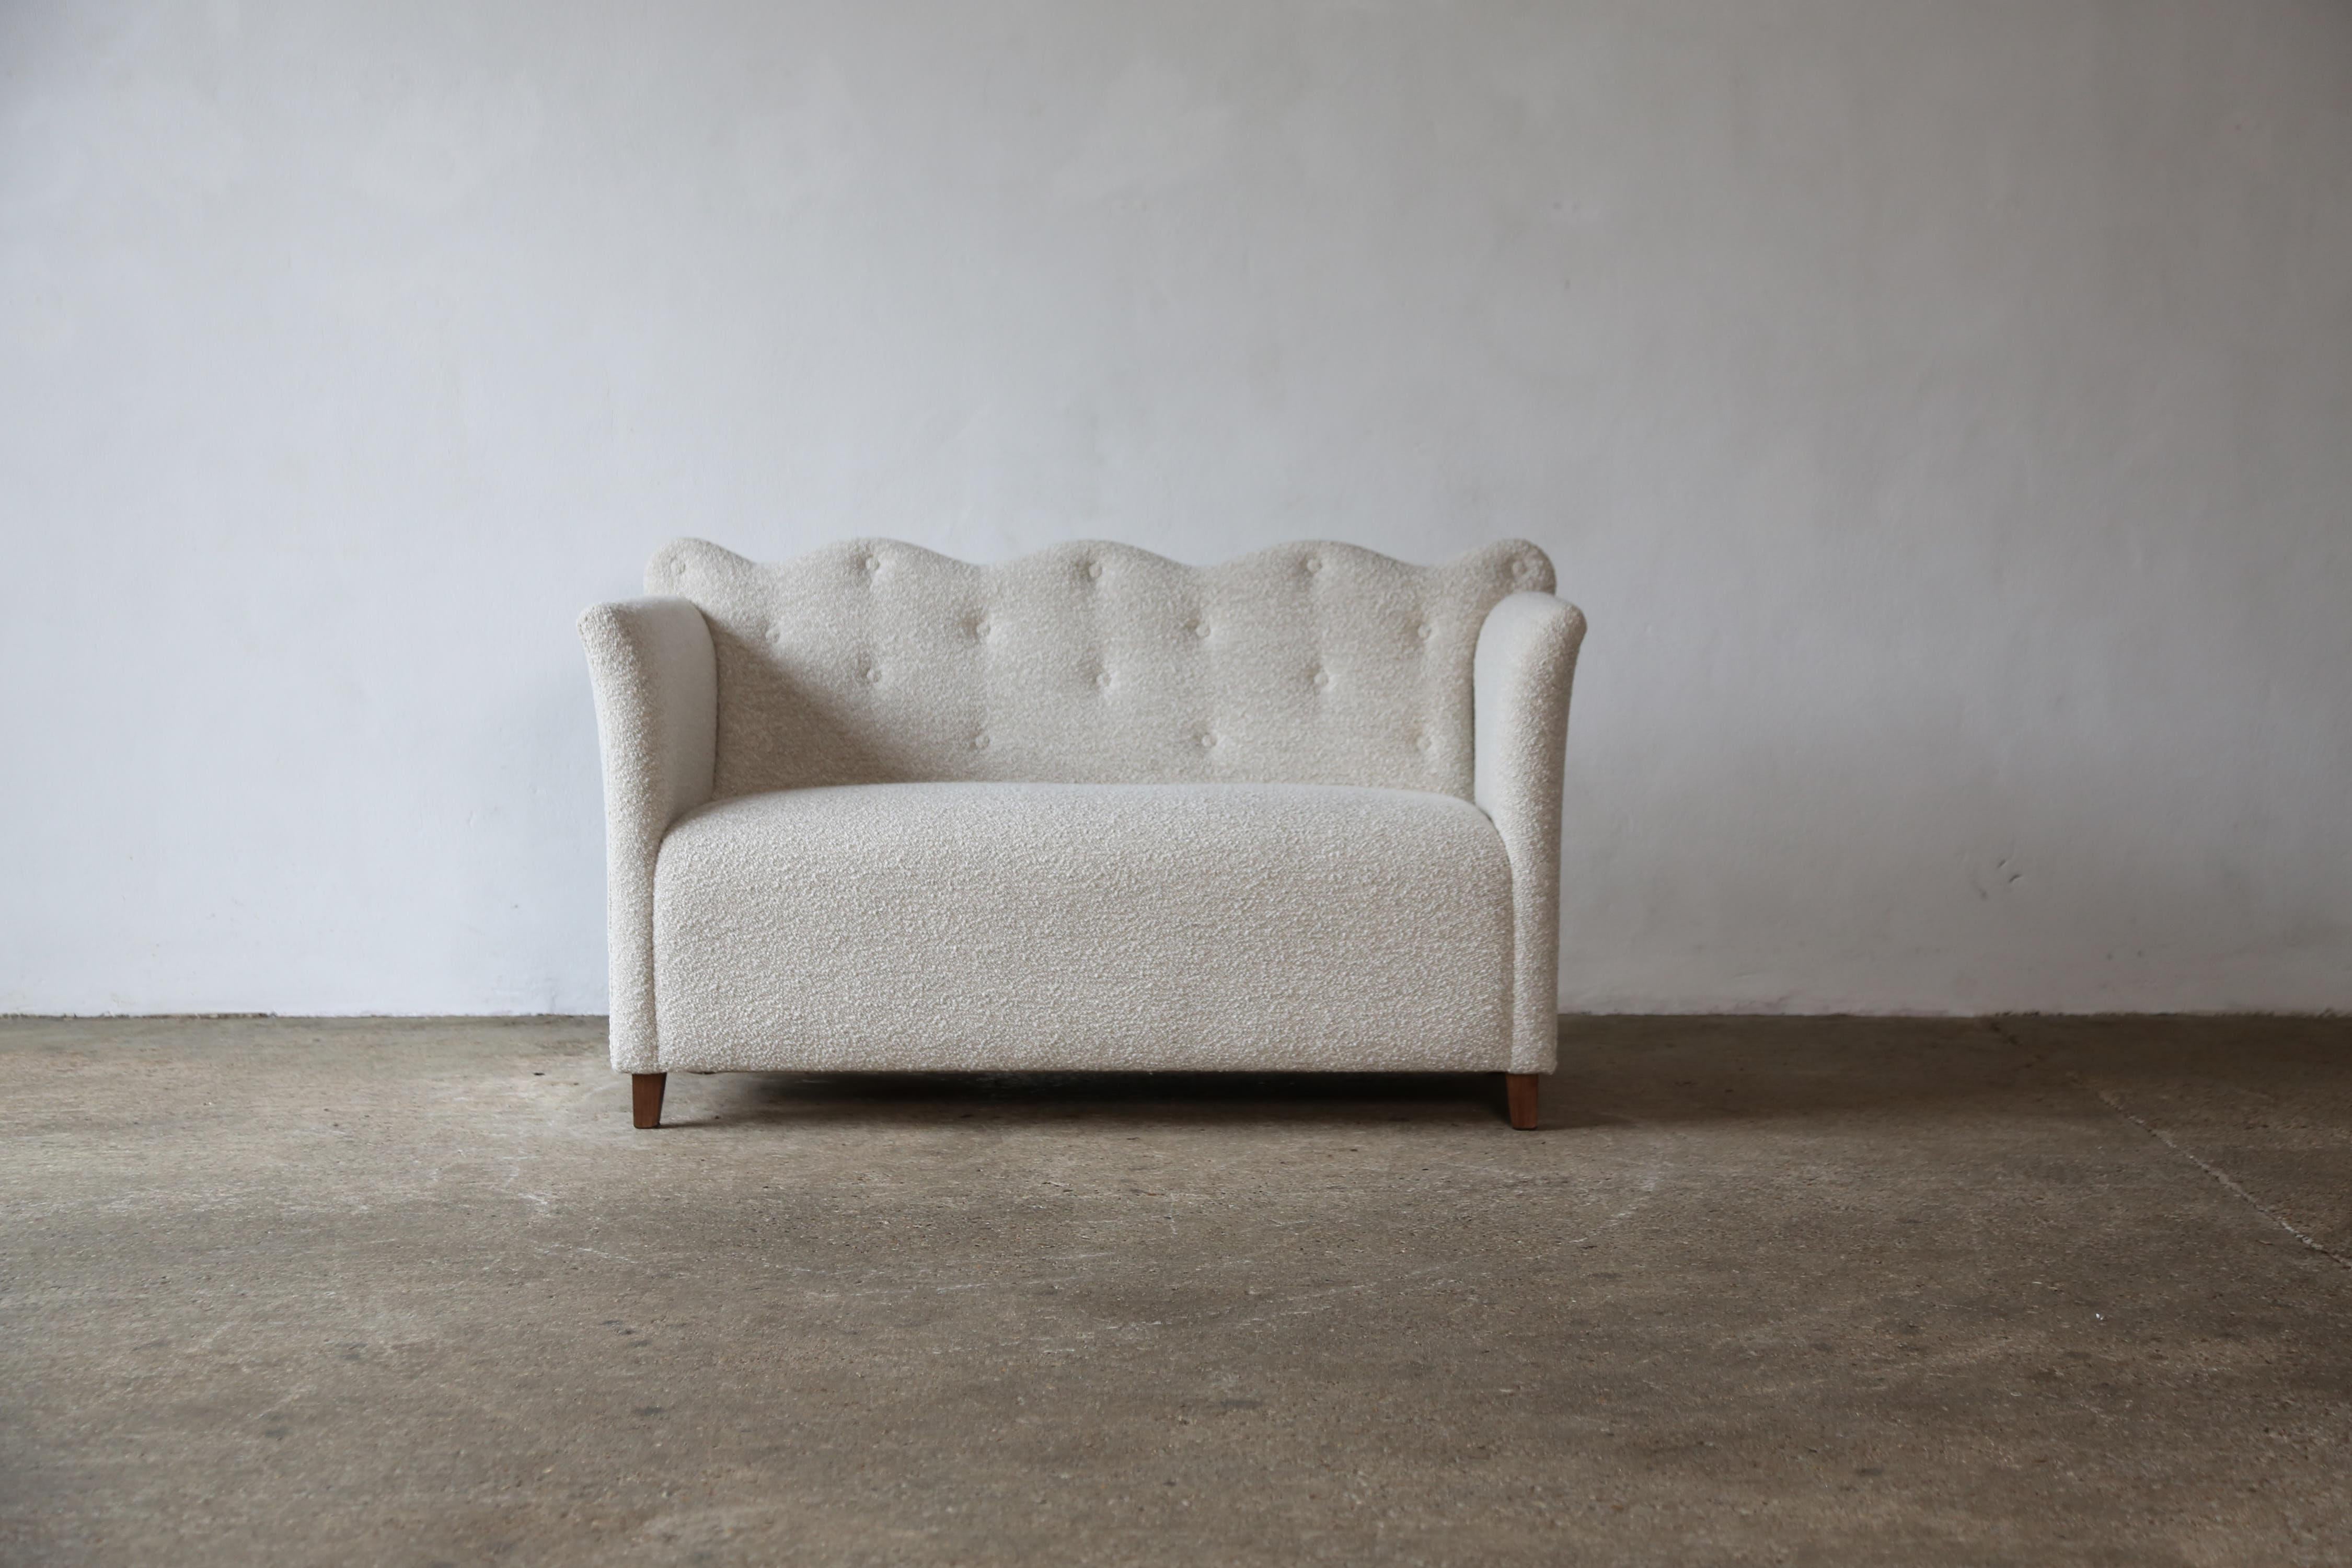 An elegant modern scallop back sofa upholstered in Lelievre Lama Naturel wool boucle.  Fast shipping worldwide.